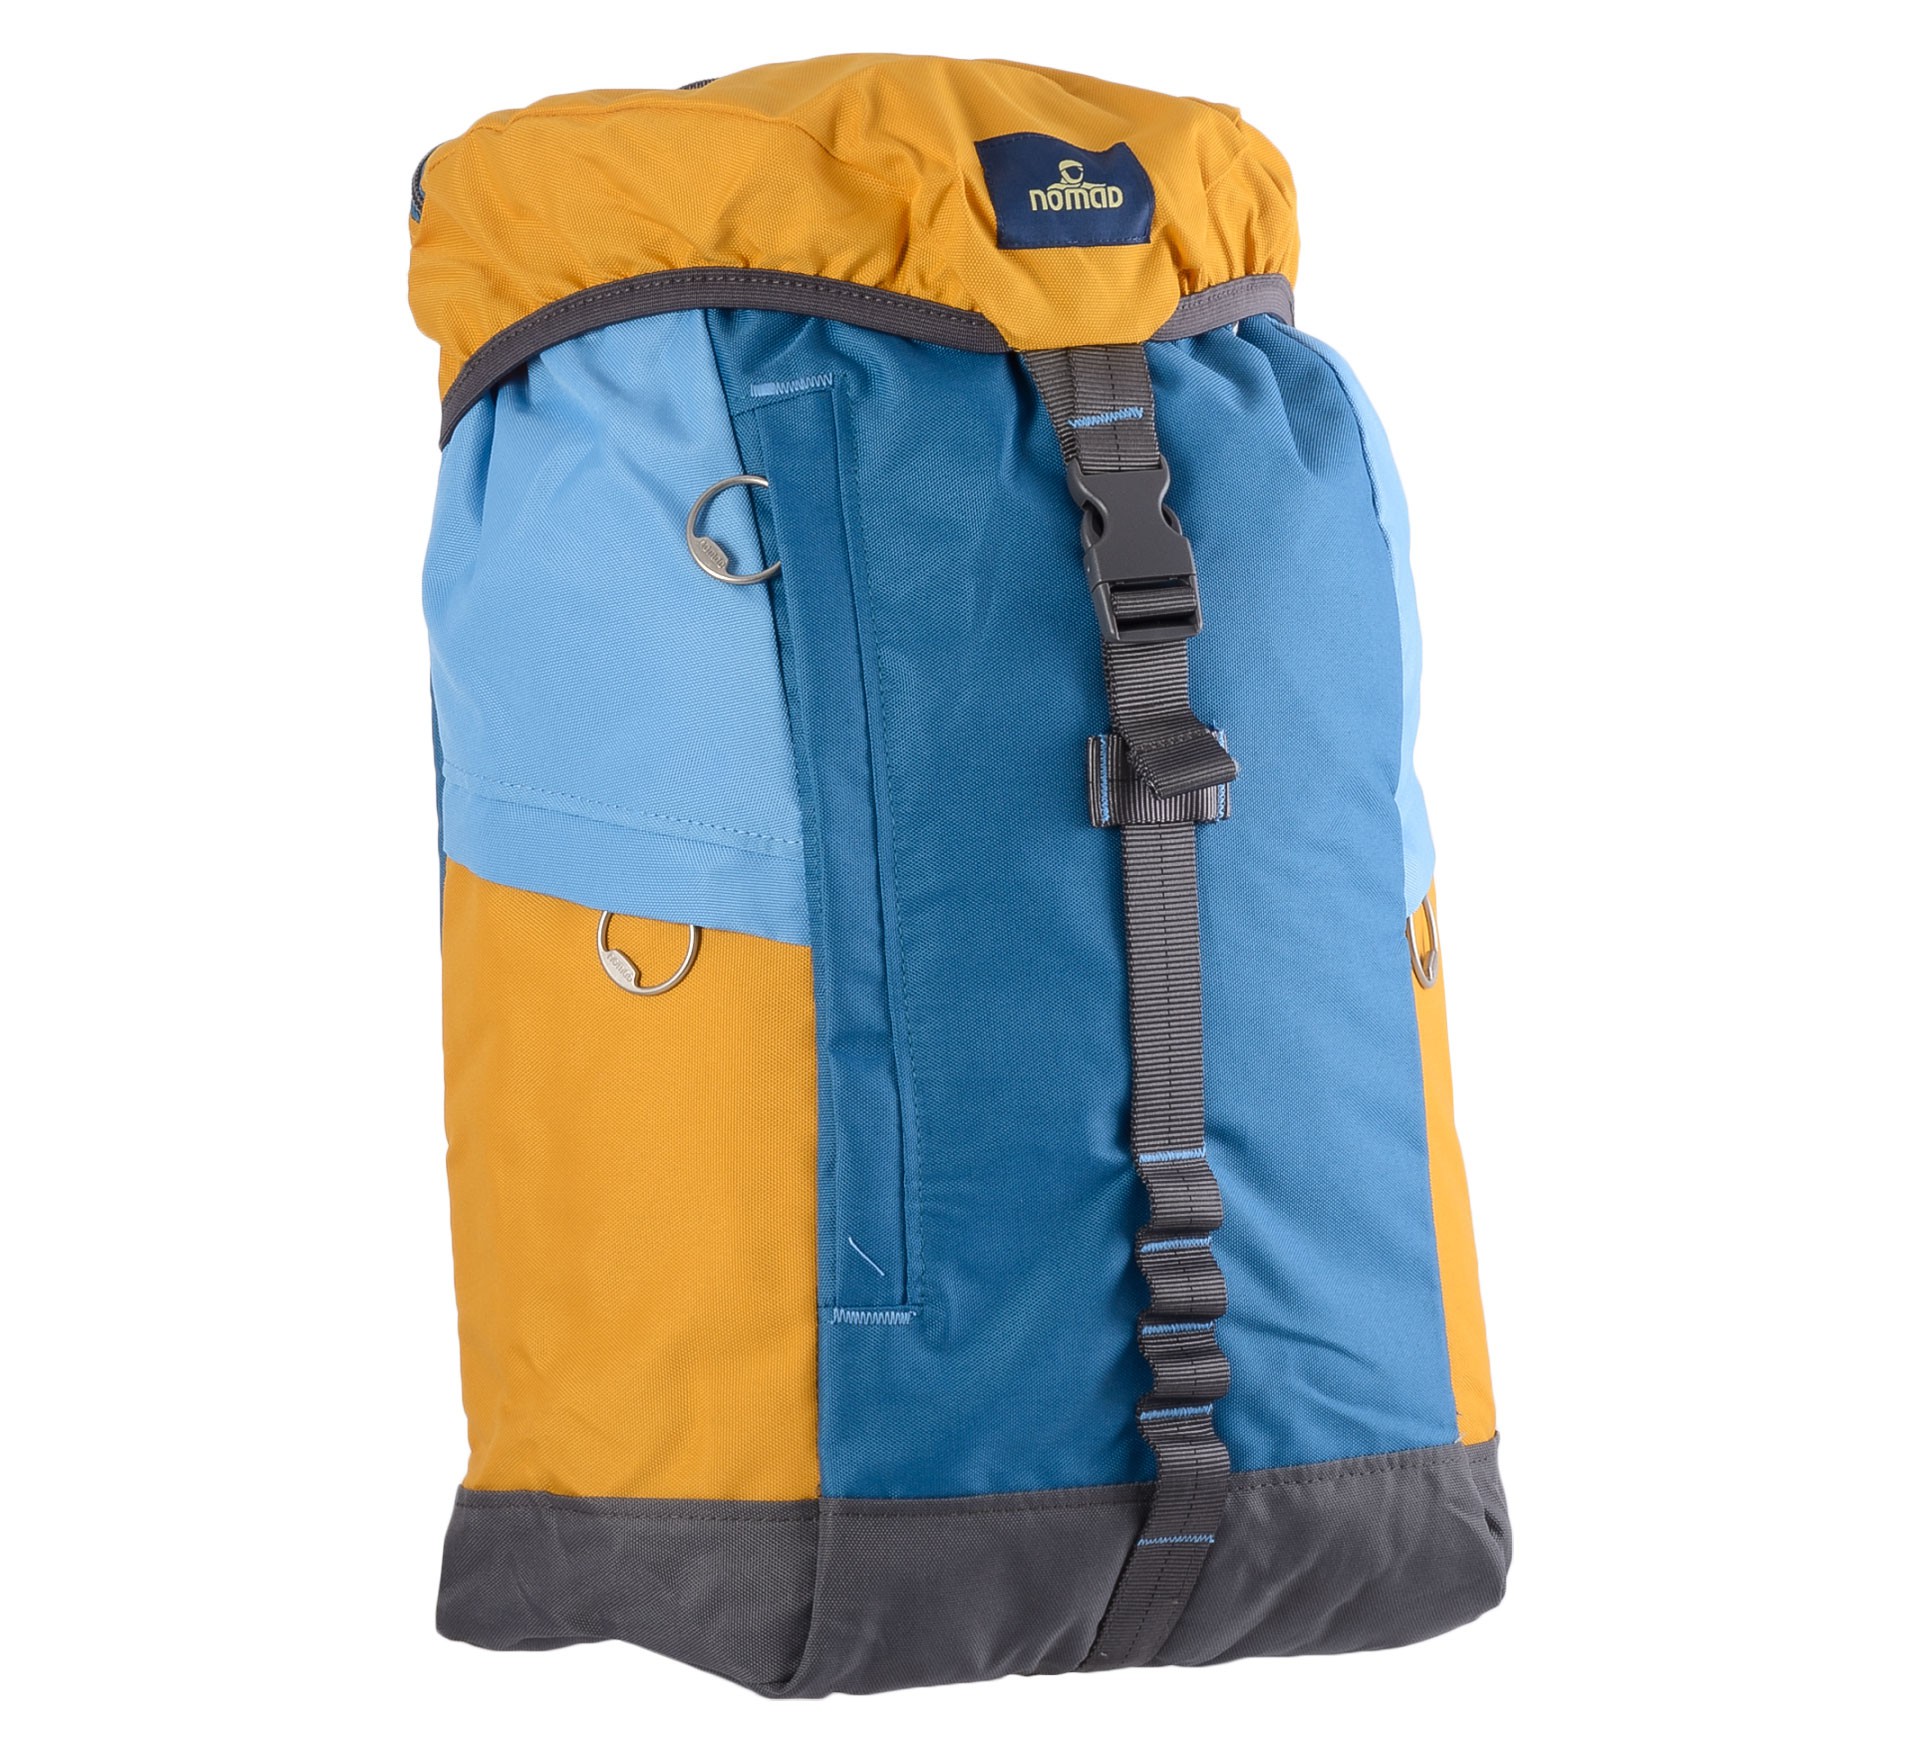 Plutosport - Nomad Backpack Polyester